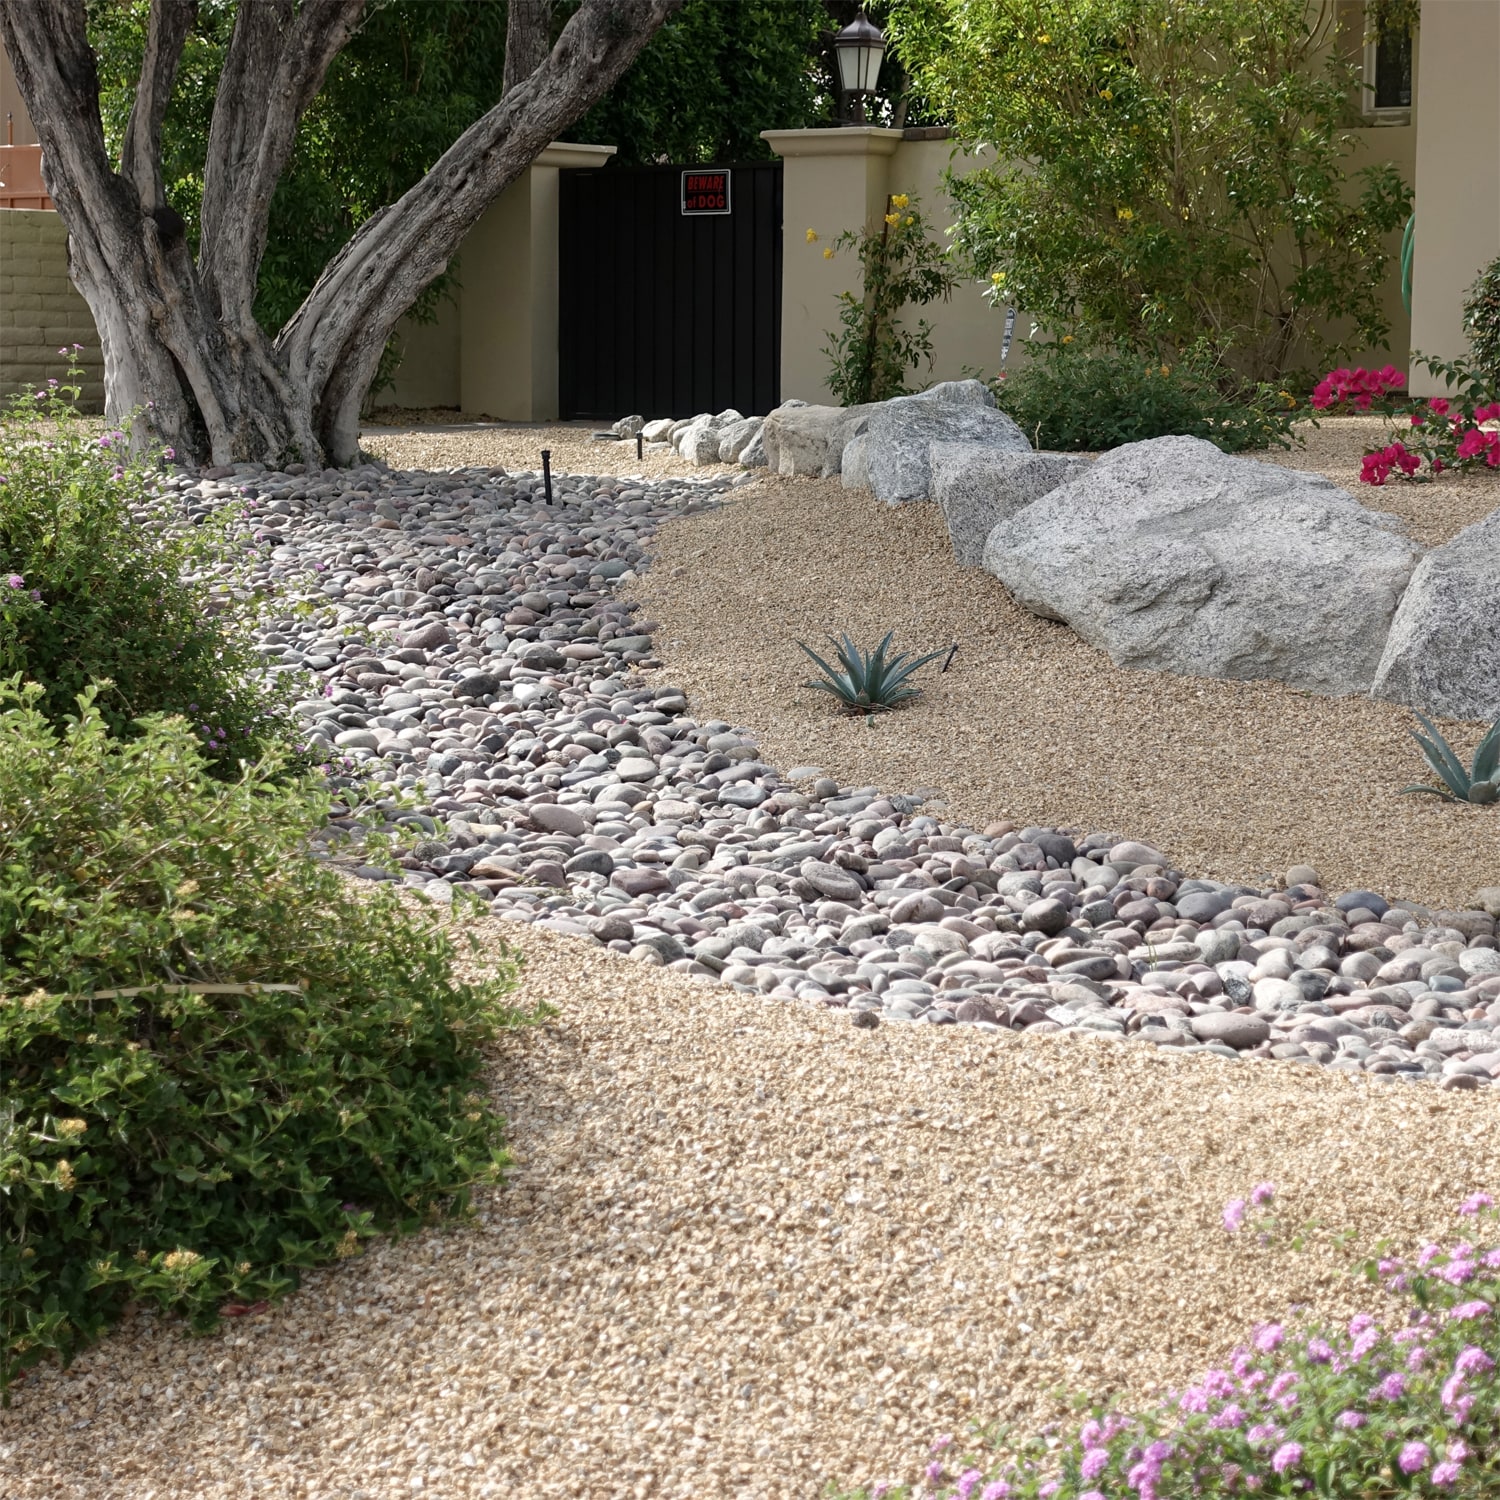 Fabric Pebbles Small Rocks Potted Garden KAUFMAN Cotton 1/4 Yard 6344